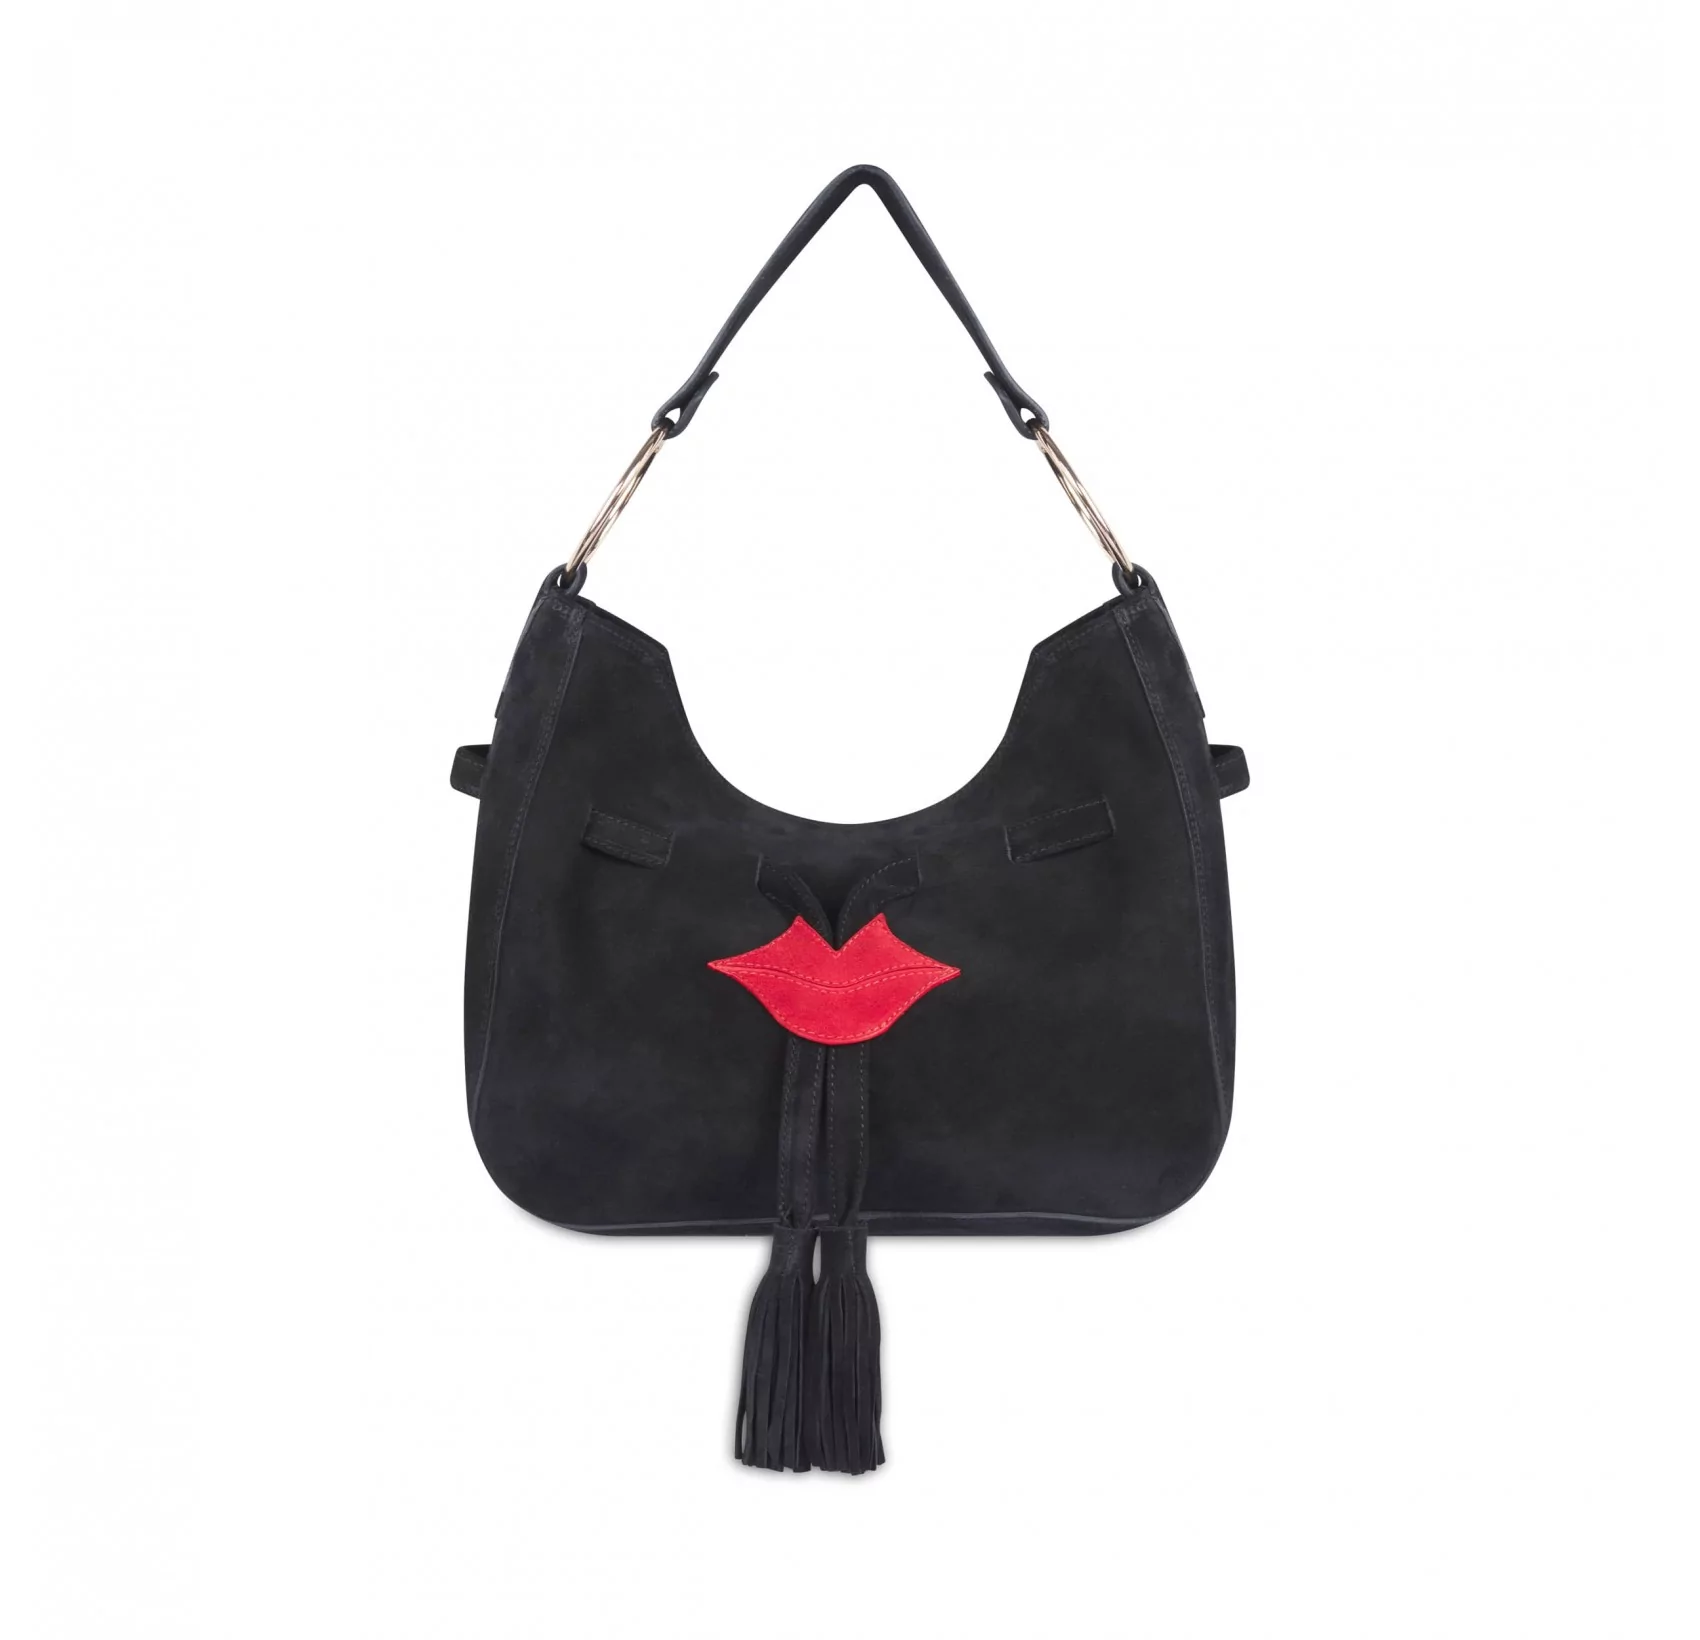 Black and red MIKI CITY soft tote bag |Gloria Balensi